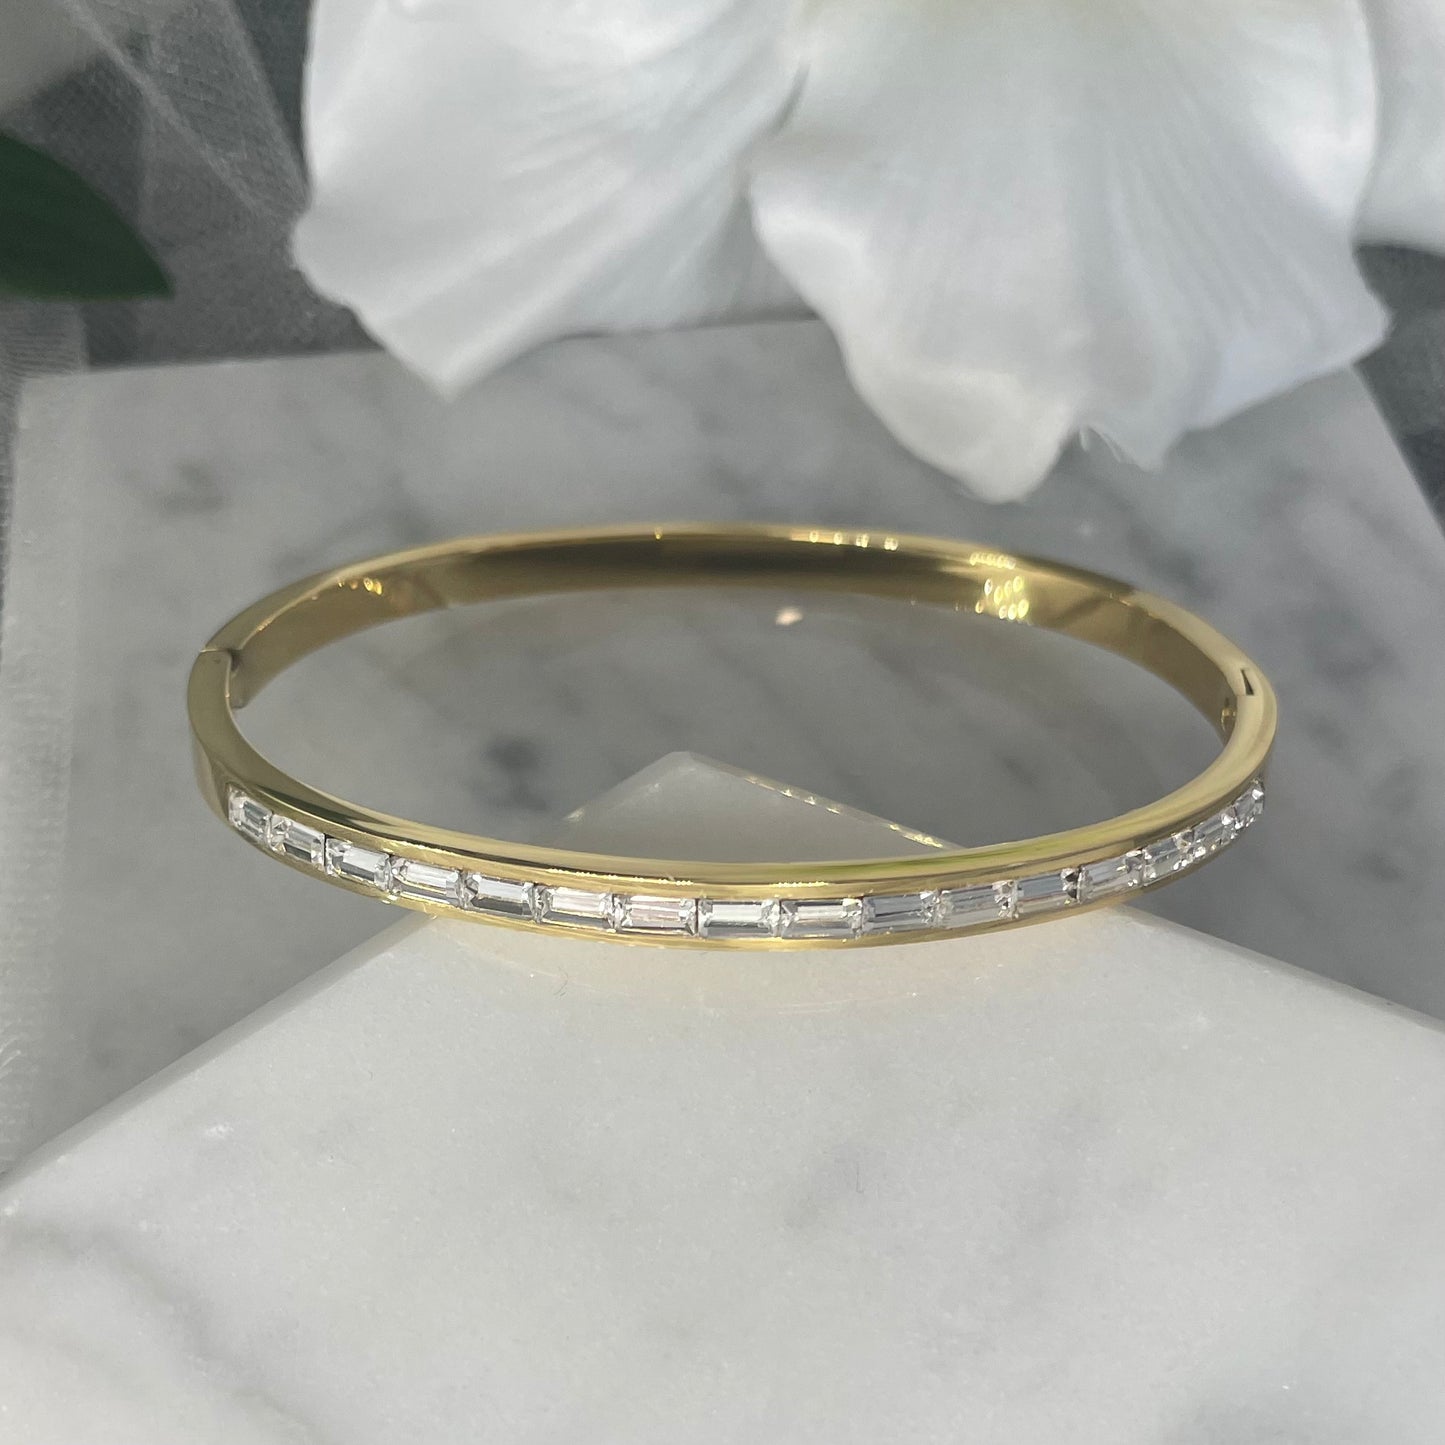 Allegra Bridal Bracelet with Colorful Crystals and 18K Gold Plating - Divine Bridal